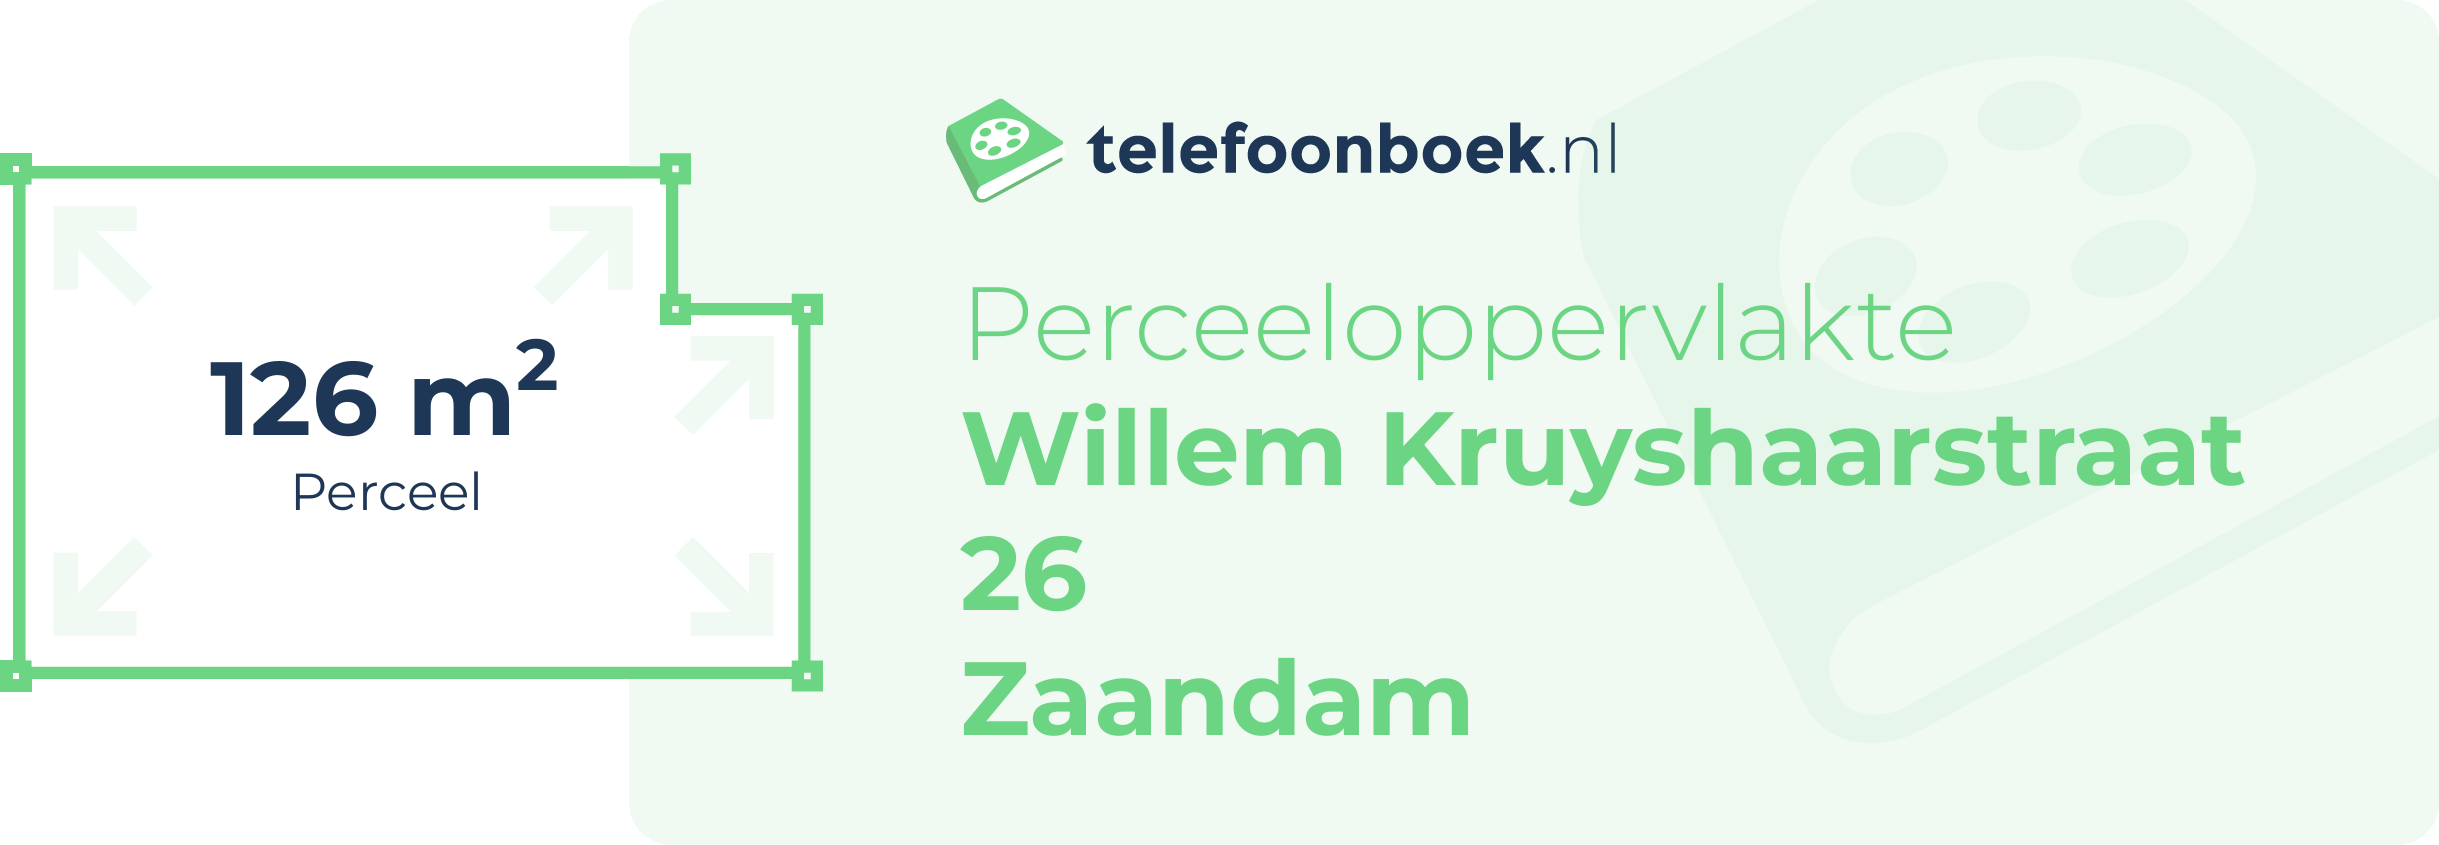 Perceeloppervlakte Willem Kruyshaarstraat 26 Zaandam